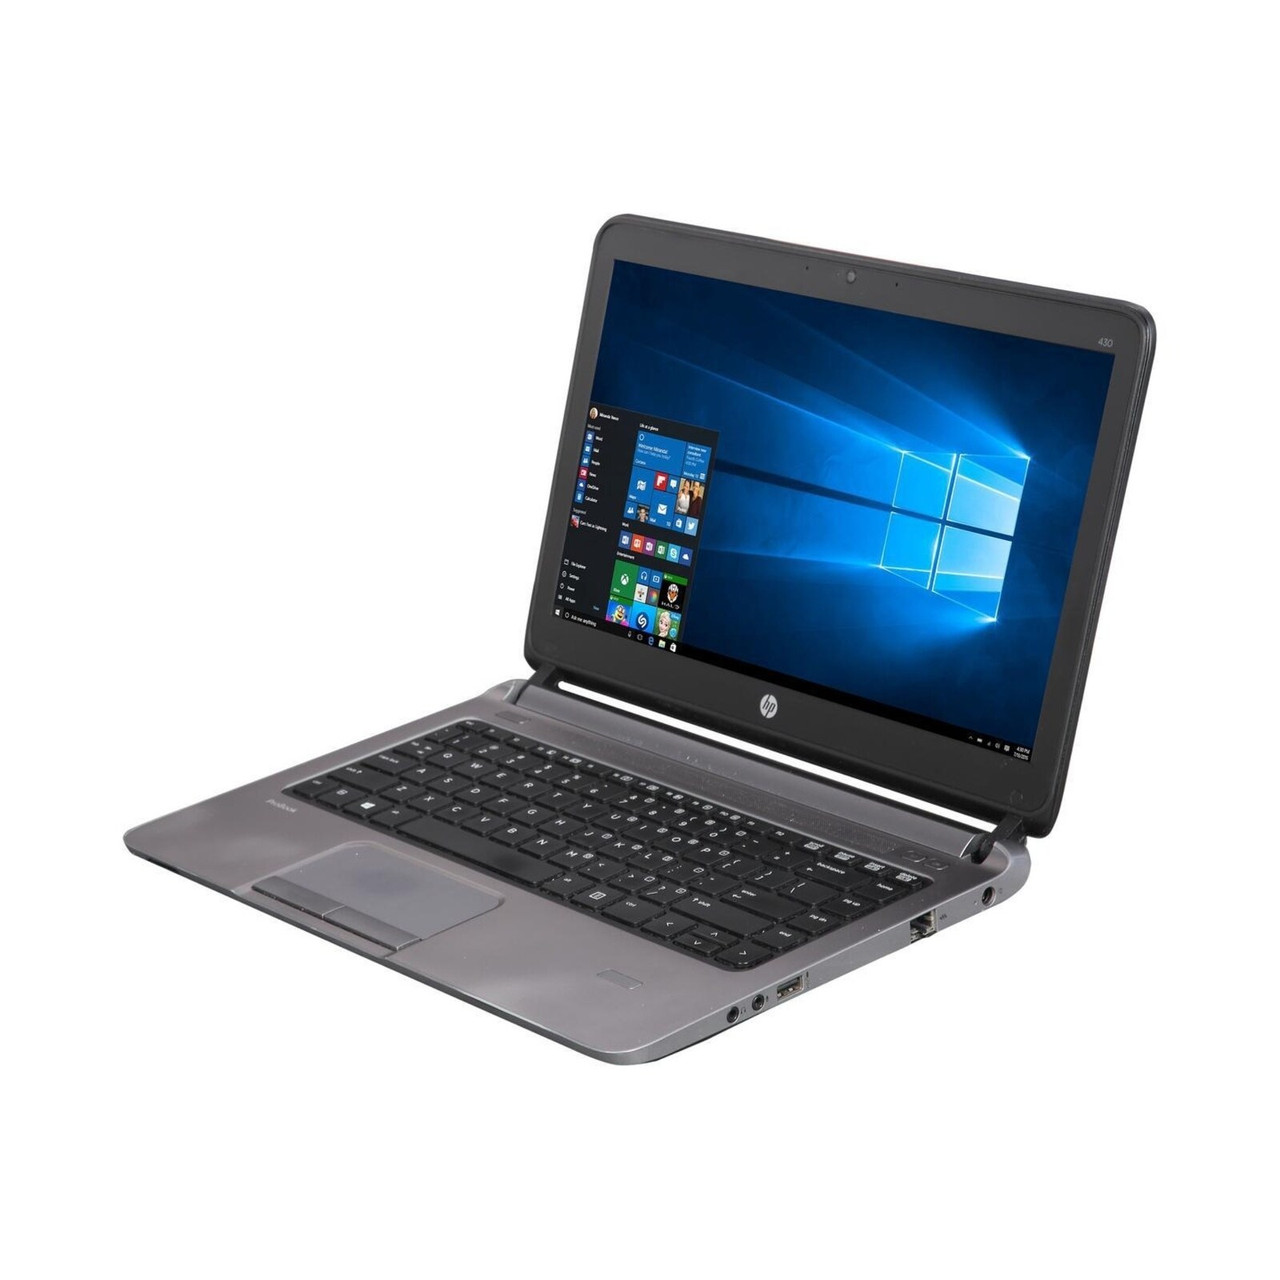 HP ProBook Laptop Computer PC 13.3" 430 G2 i5 4th Gen 8GB 128GB SSD Windows 10 Pro WiFi